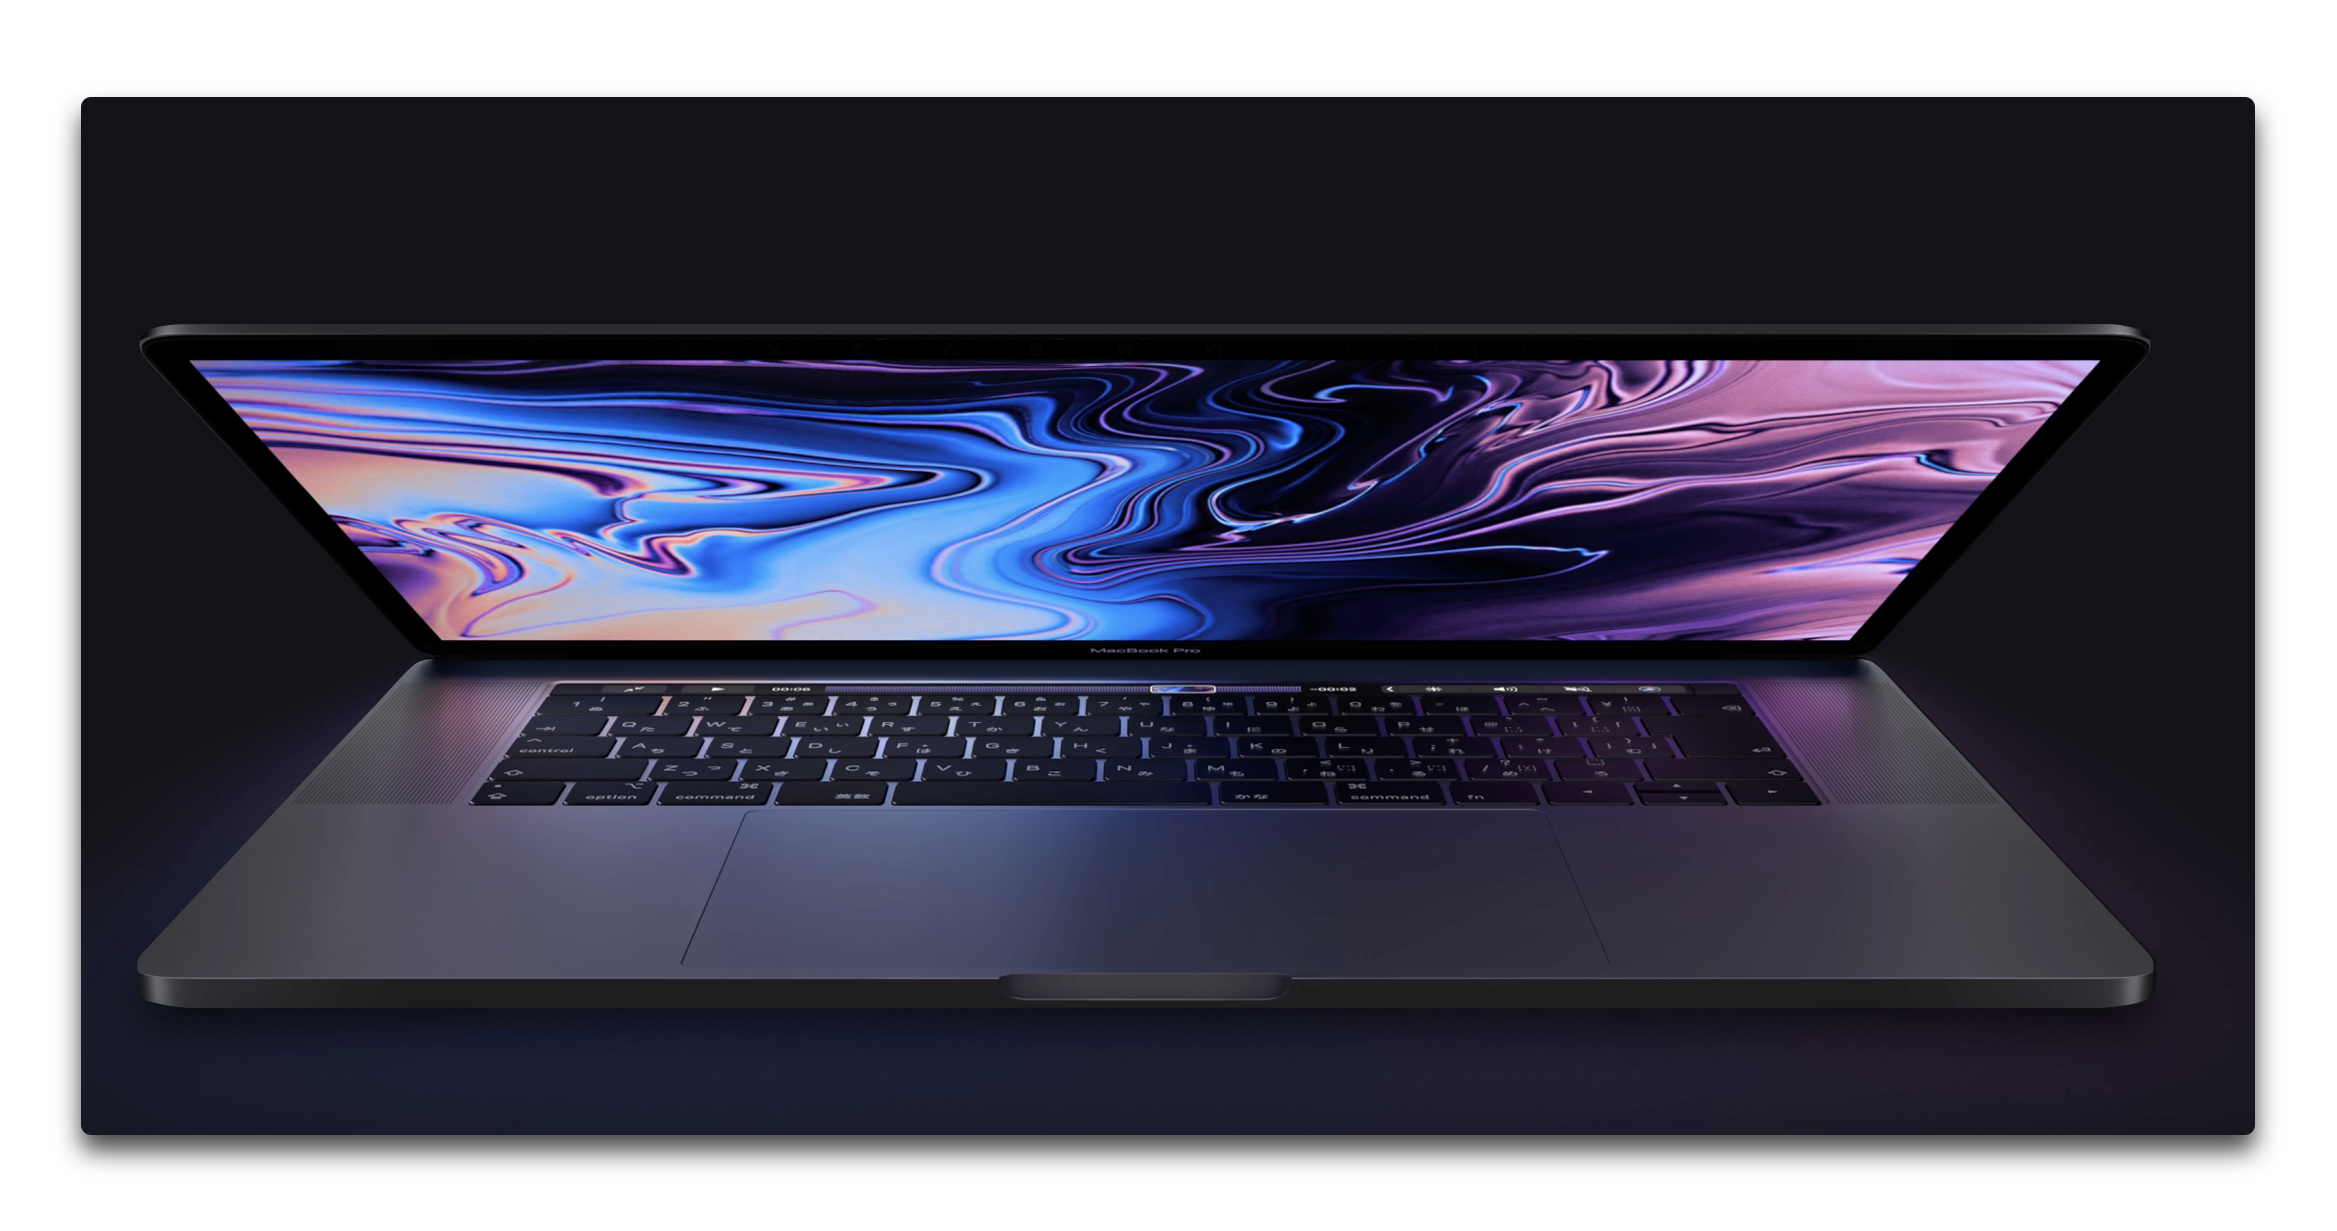 Appleの新しい MacBook Pro 2018 の新機能